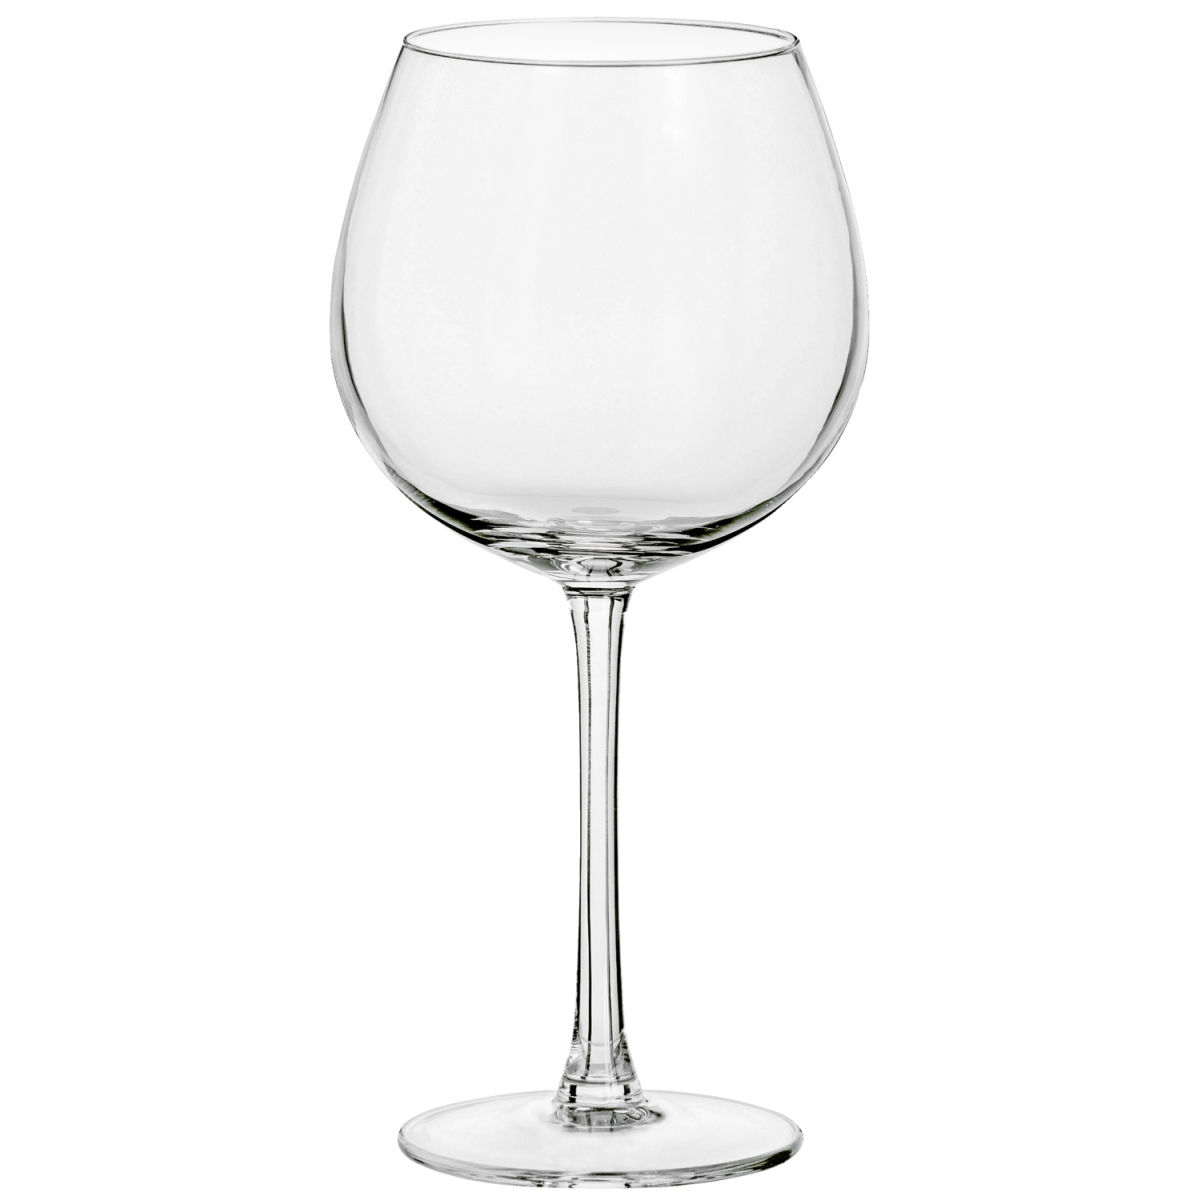 Royal leerdam Rode wijnglas Plaza Ballon; 720ml, 7.2x21.5 cm (ØxH); transparant; 6 stuk / verpakking